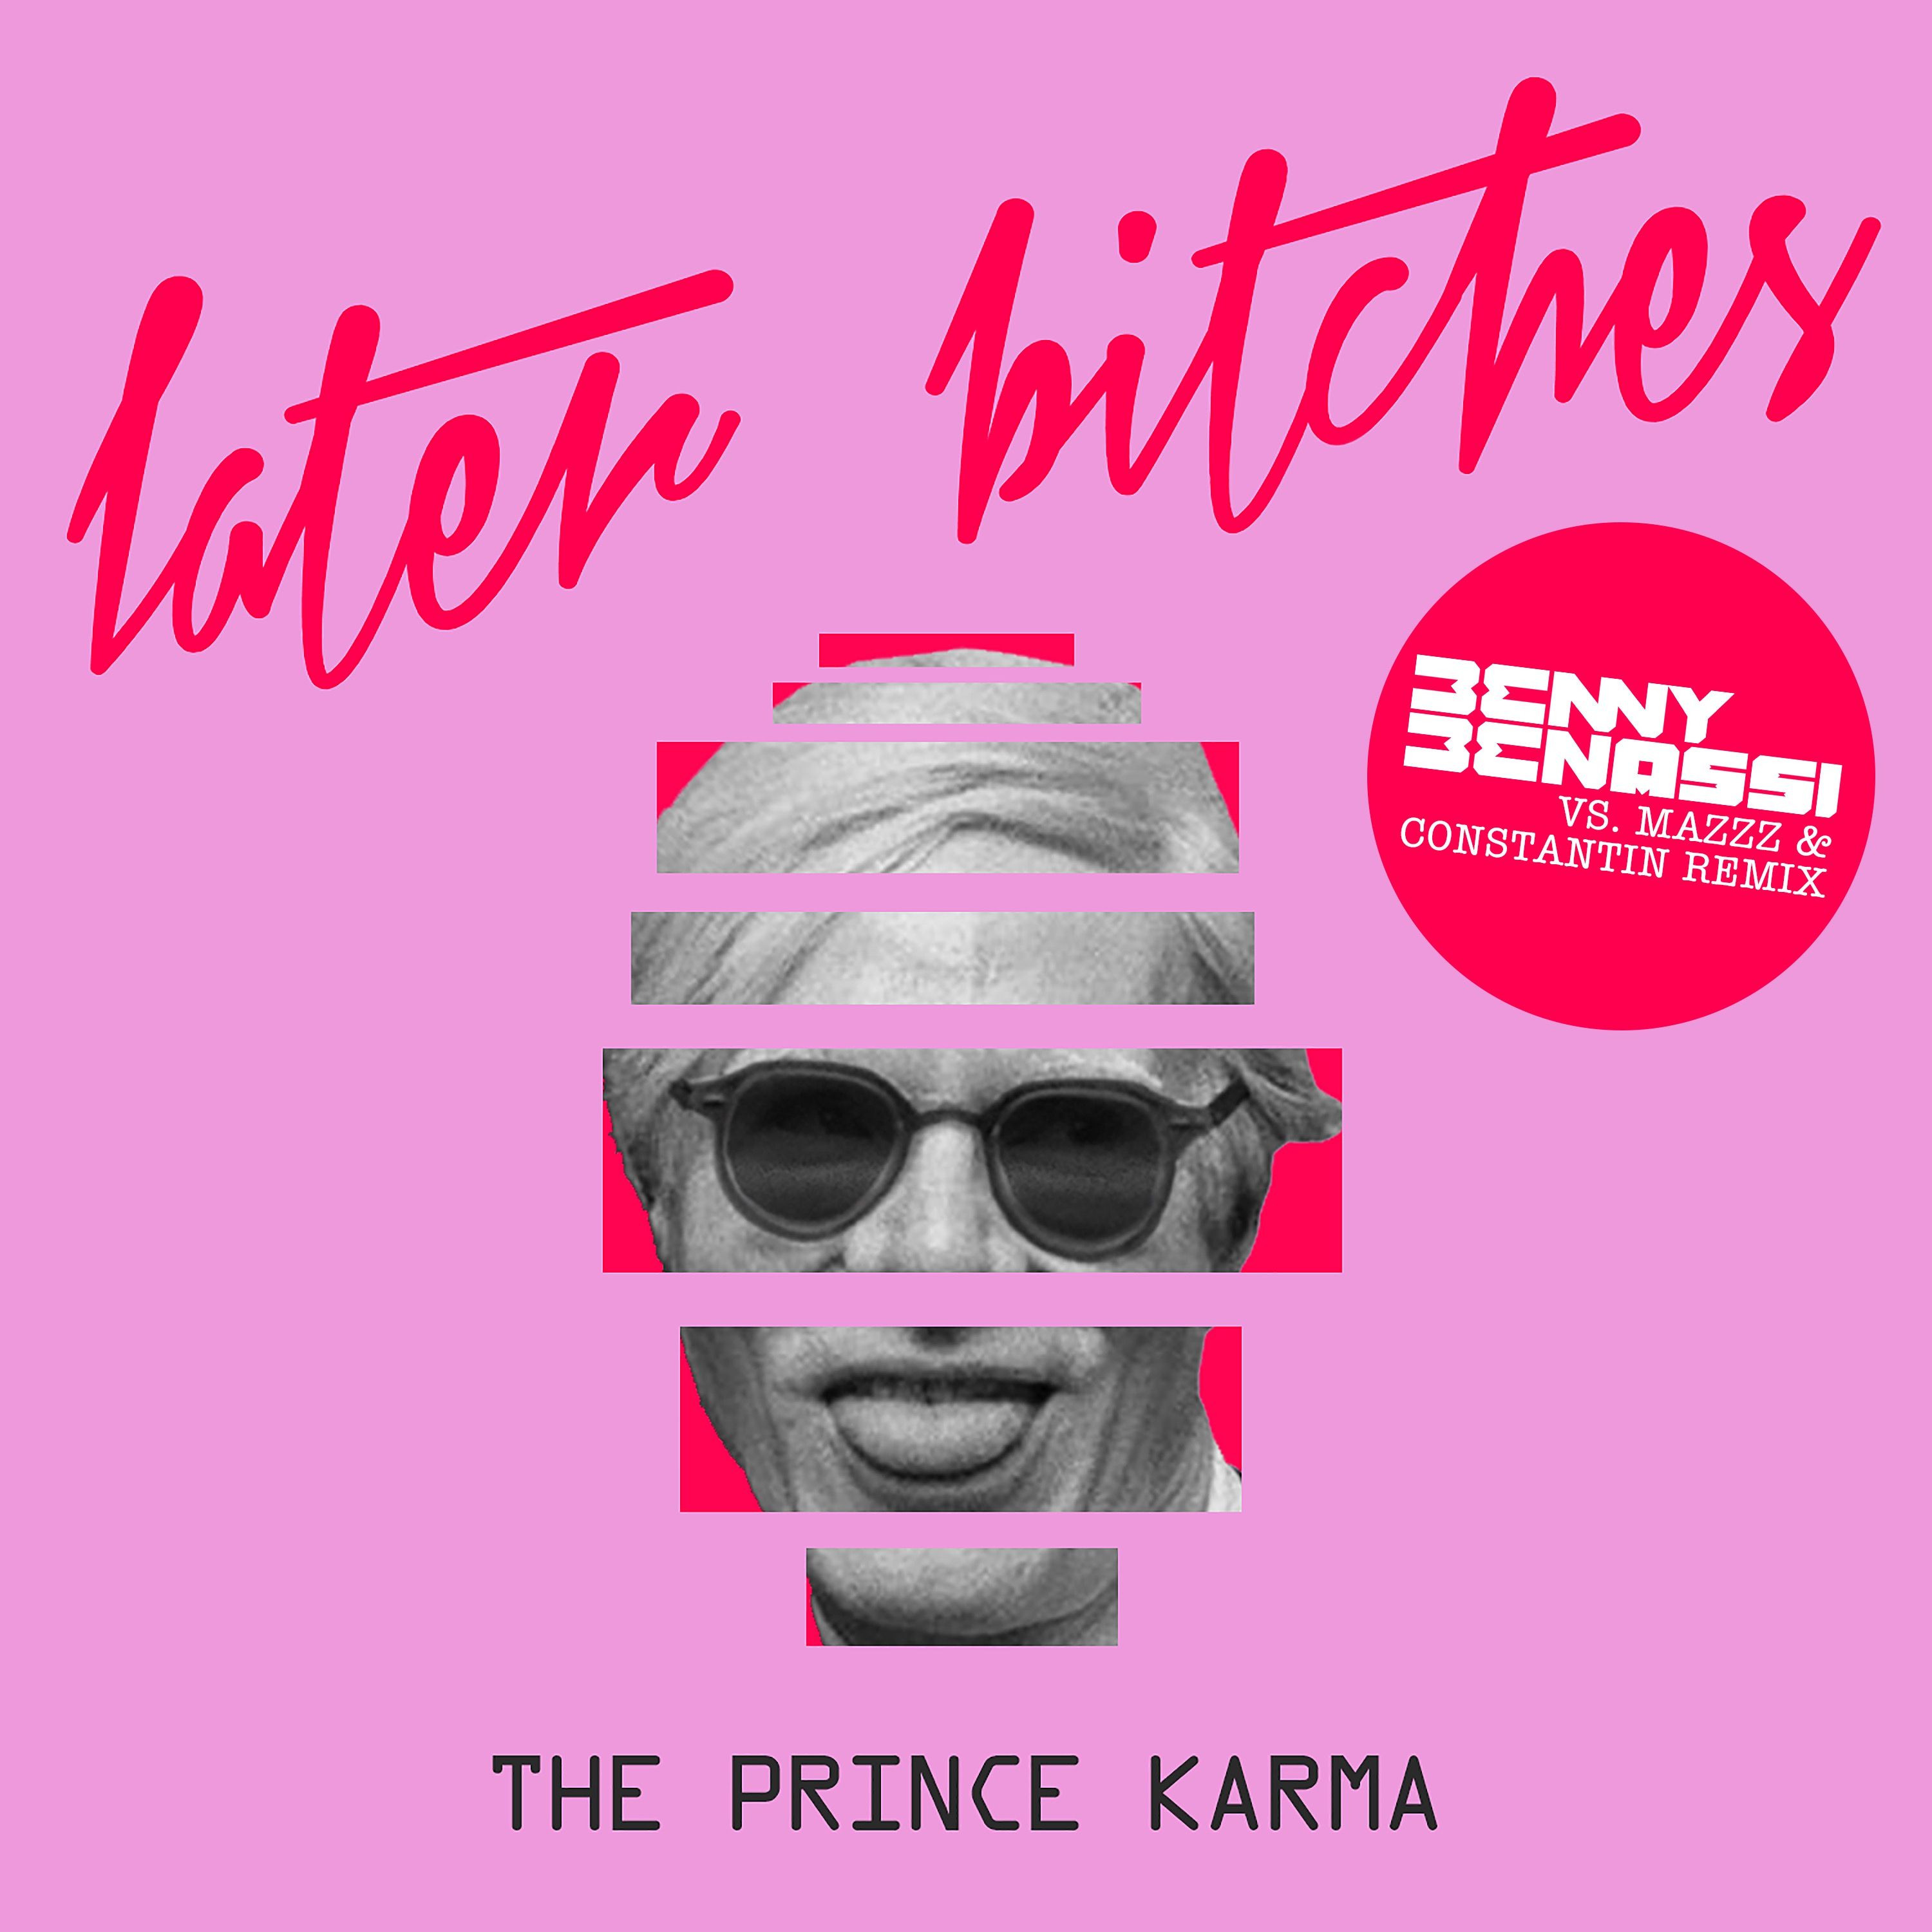 Luchdaich sìos The Prince Karma - Later Bitches (Benny Benassi Vs. MazZz & Constantin Remix)